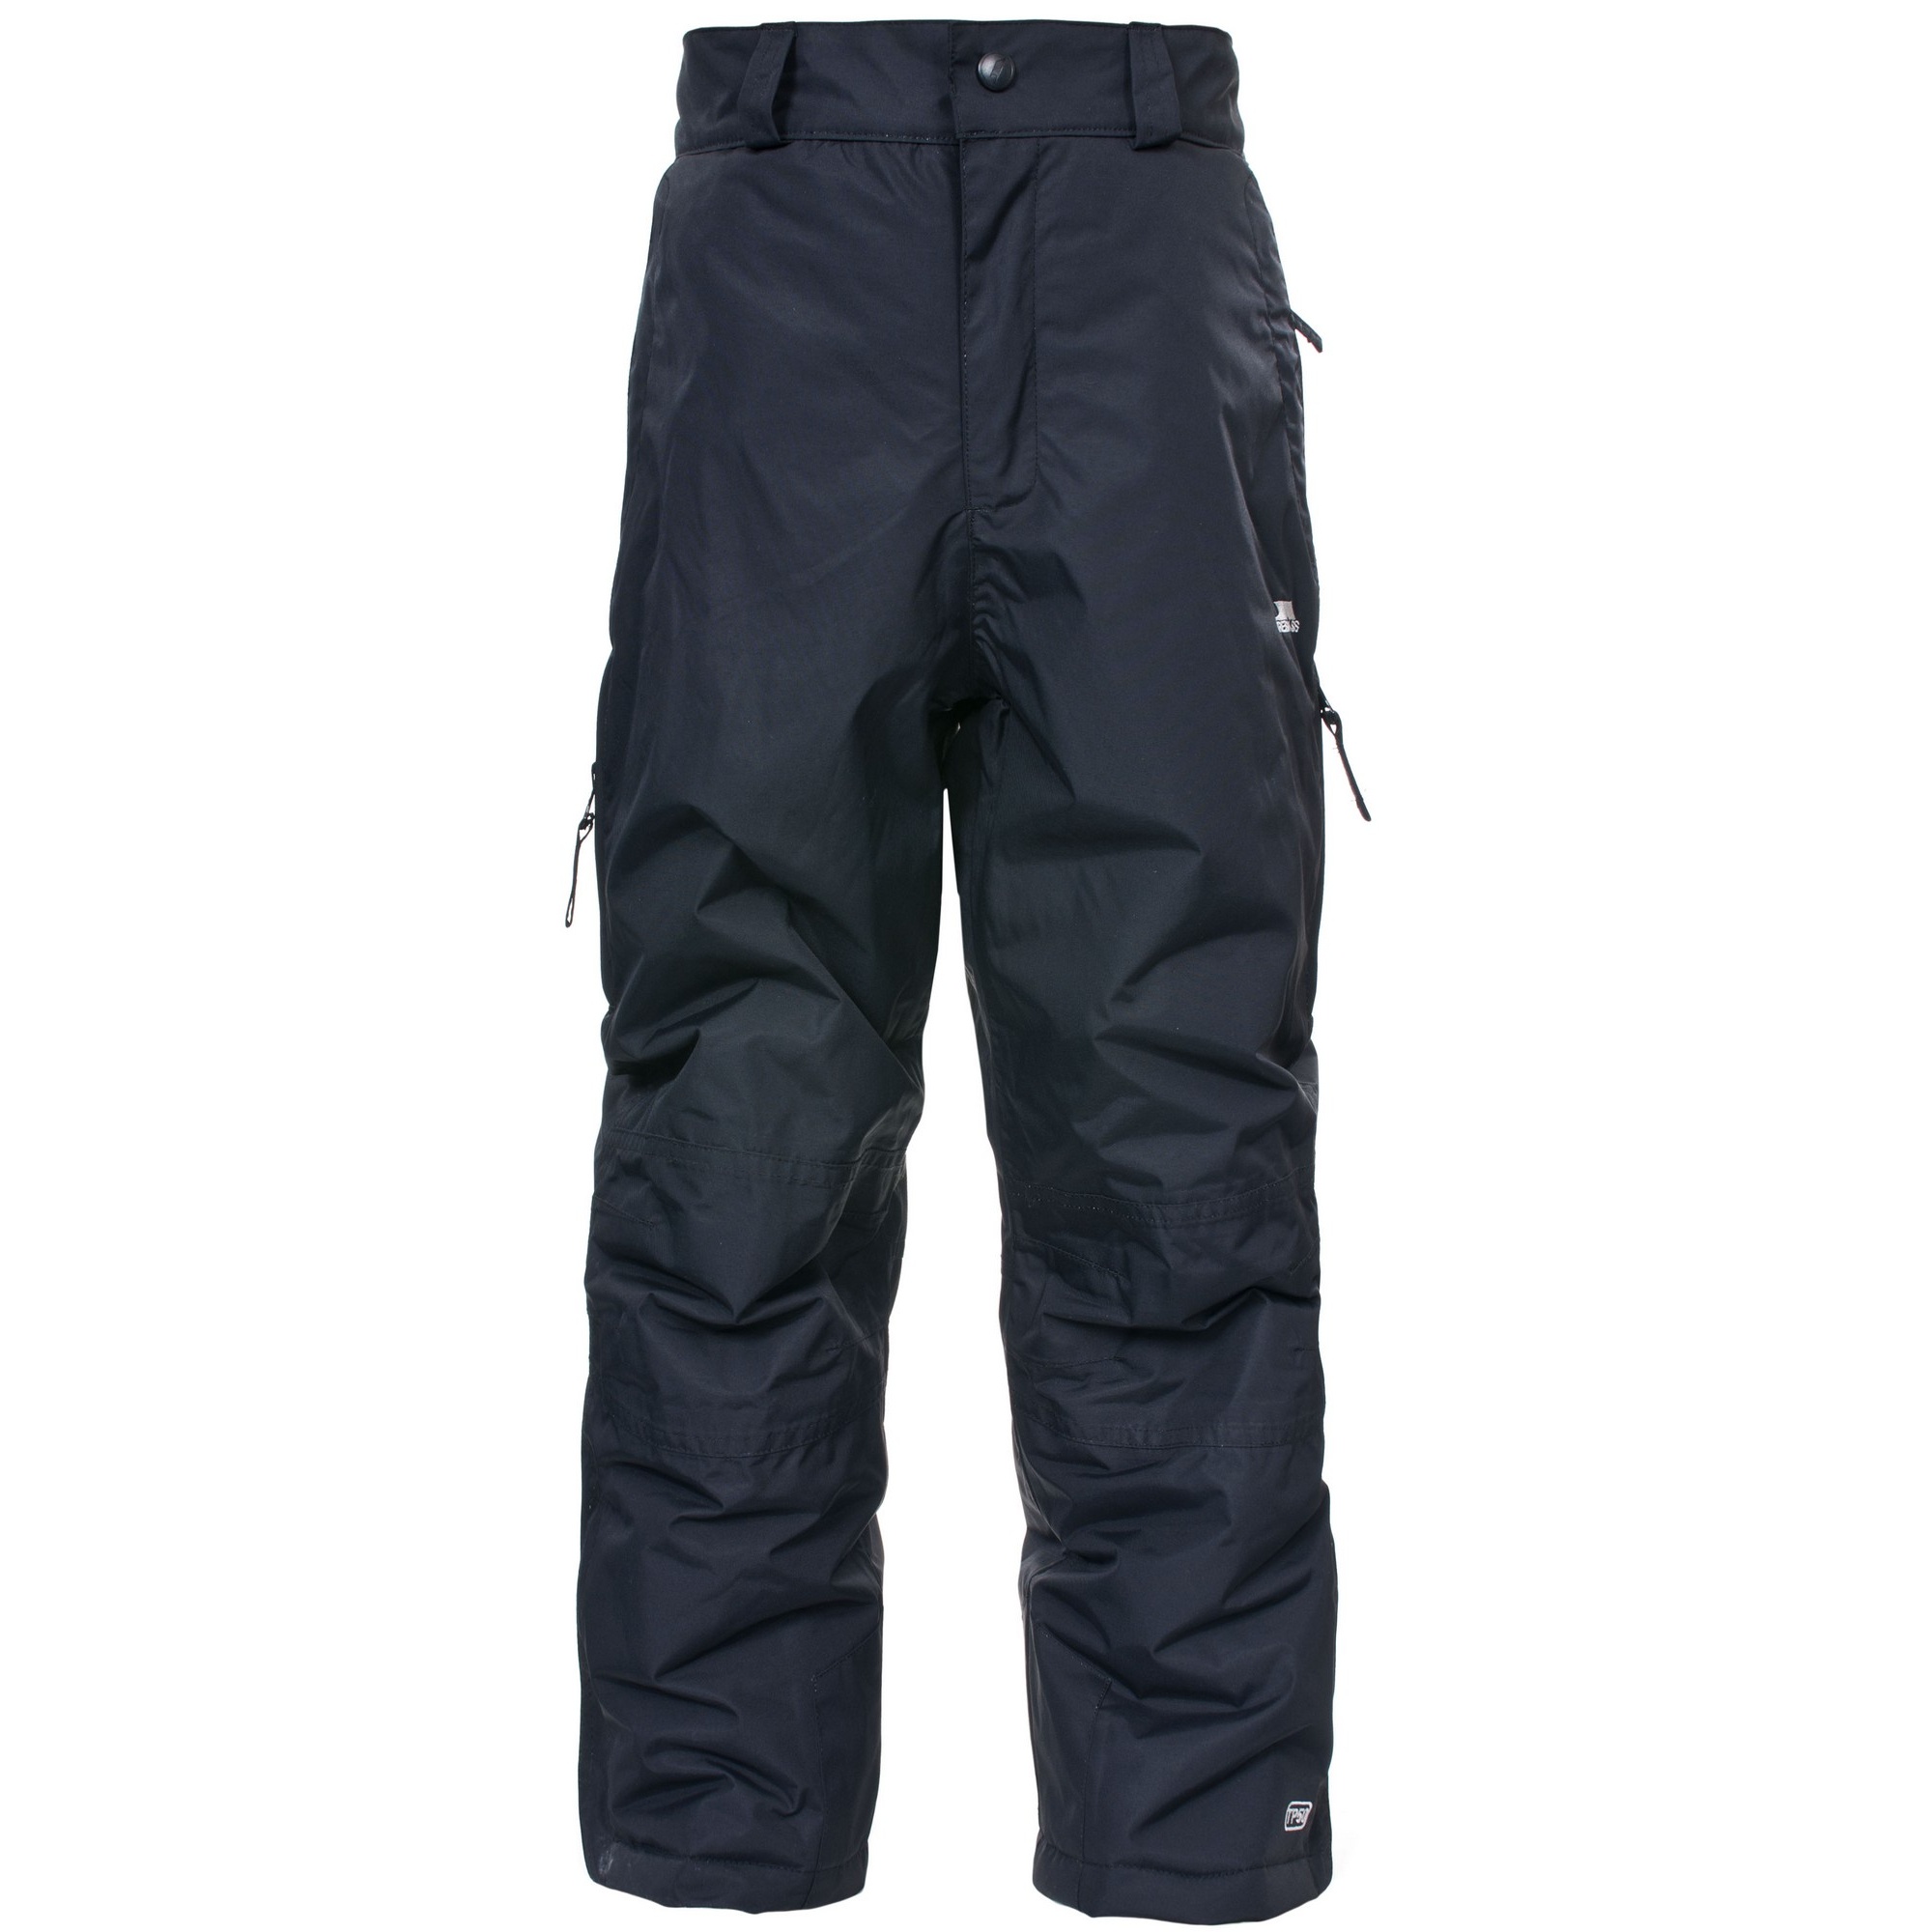 Pantalones De Esquí Impermeables Acolchados Con Tirantes Desmontables Modelo Marvelous - negro - 